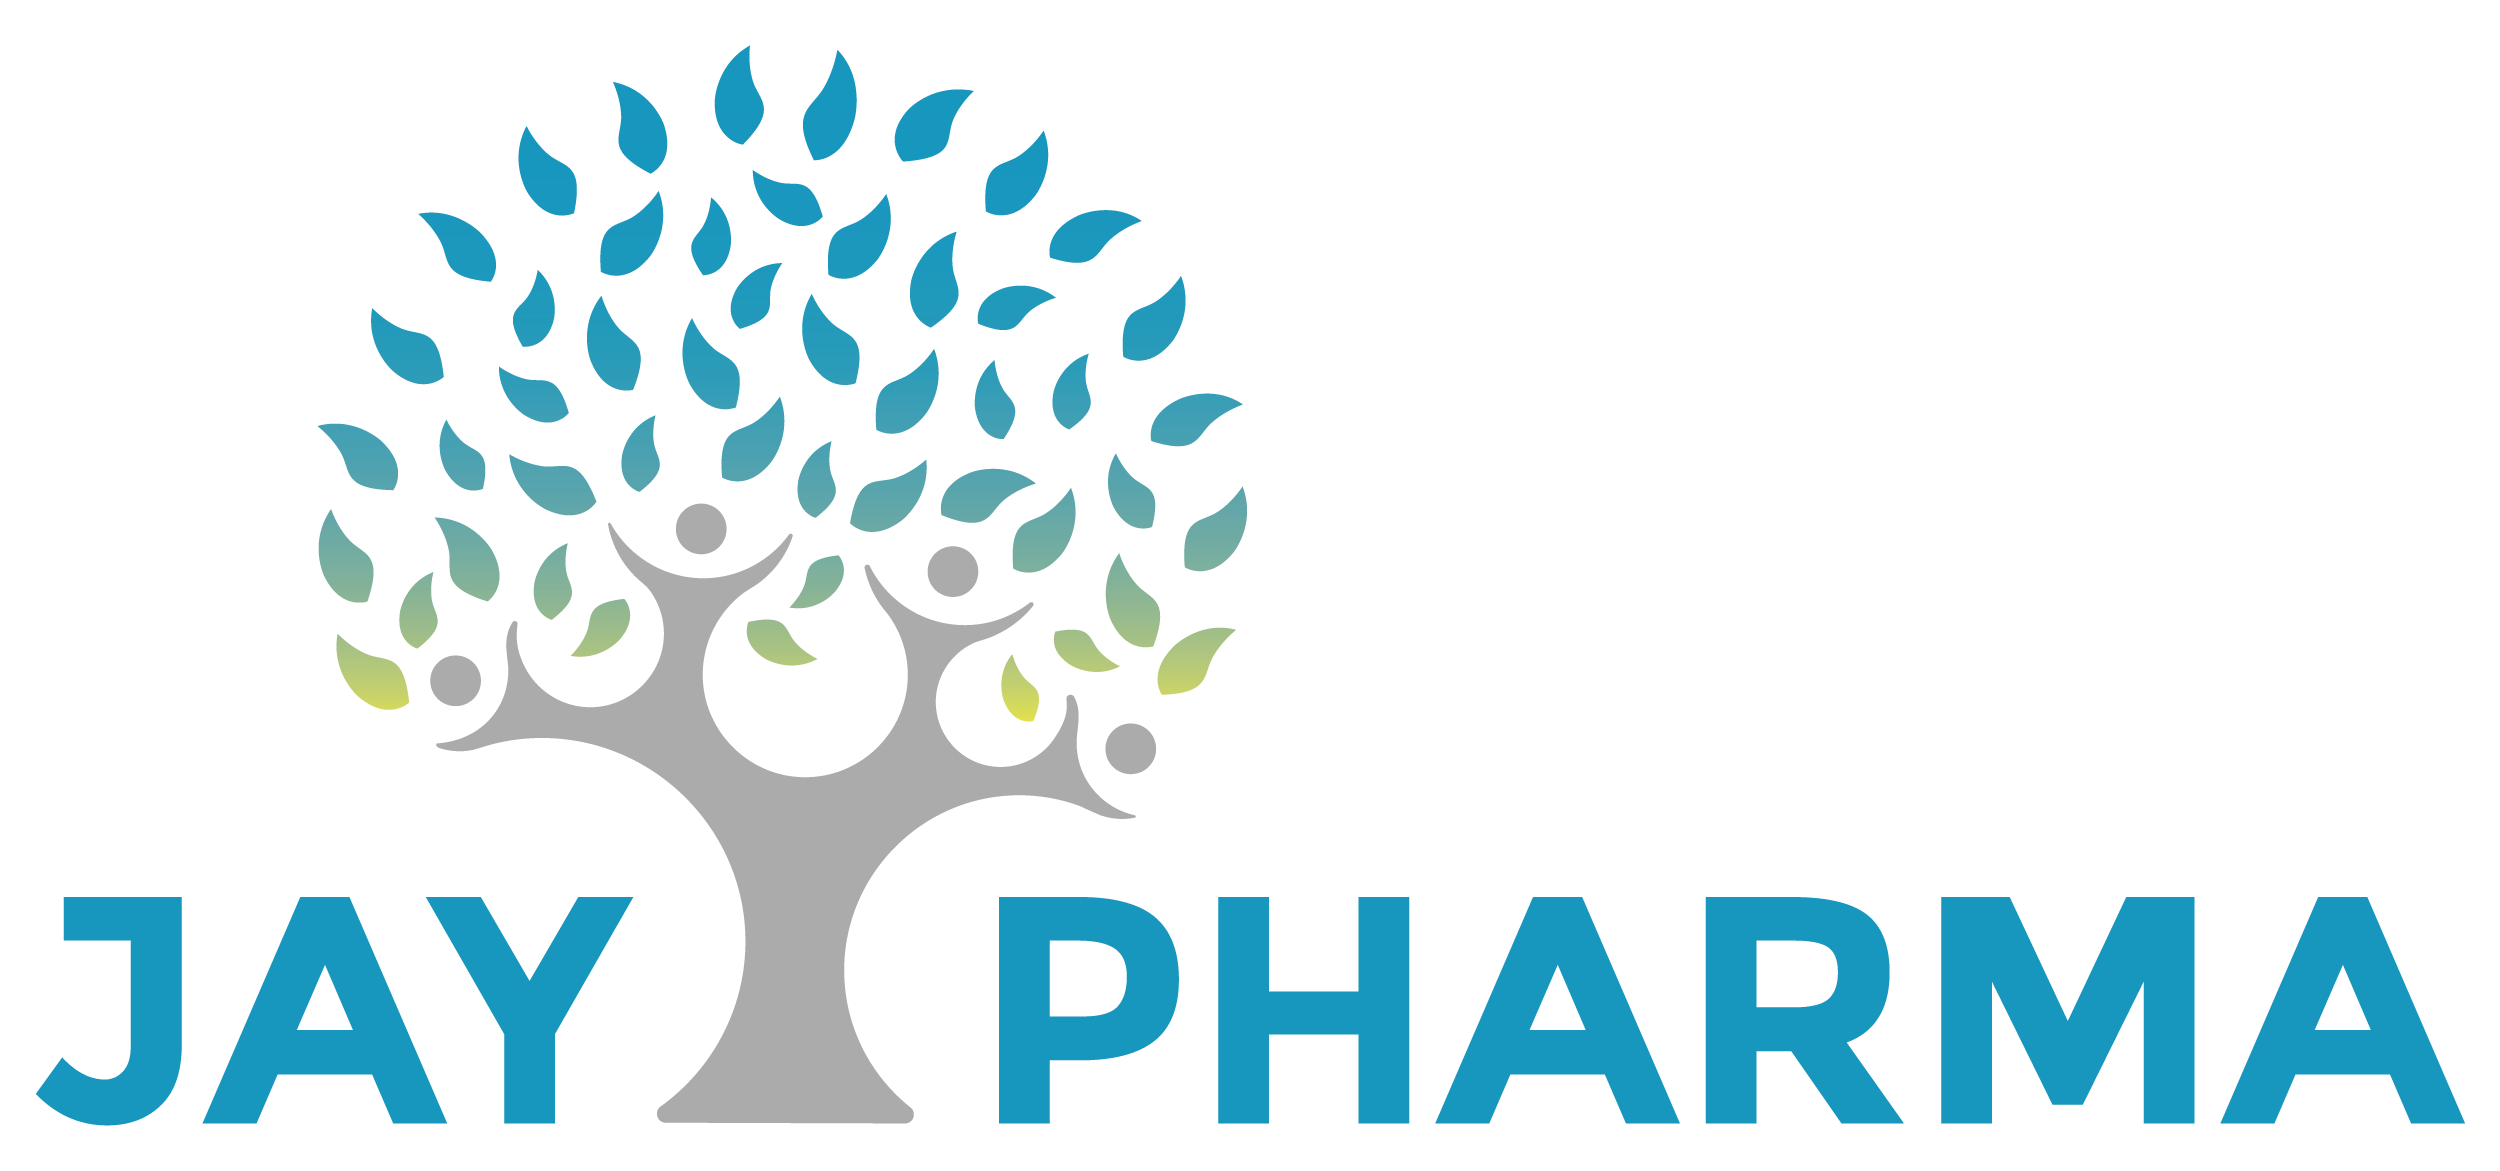 Jay-Pharma-Logo-2500px.png